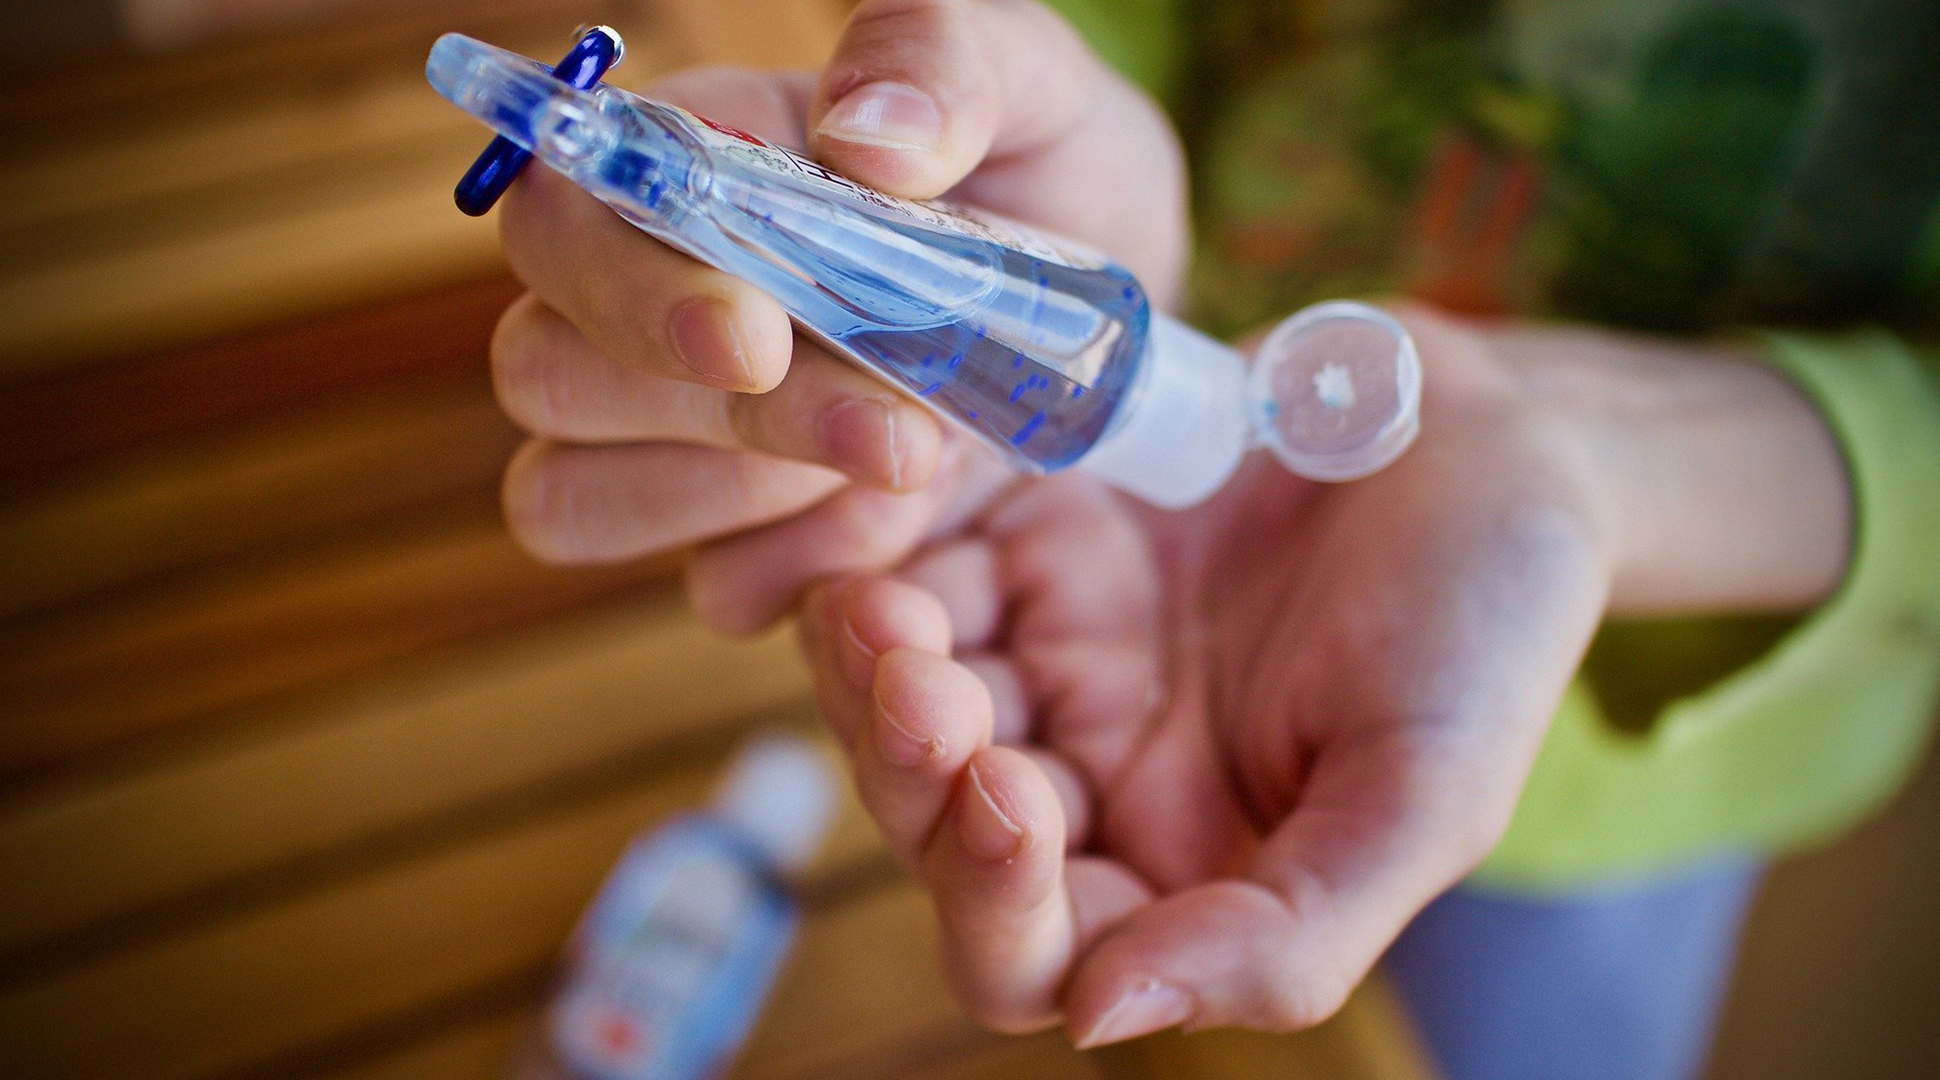 FDA issues hand sanitizer warning